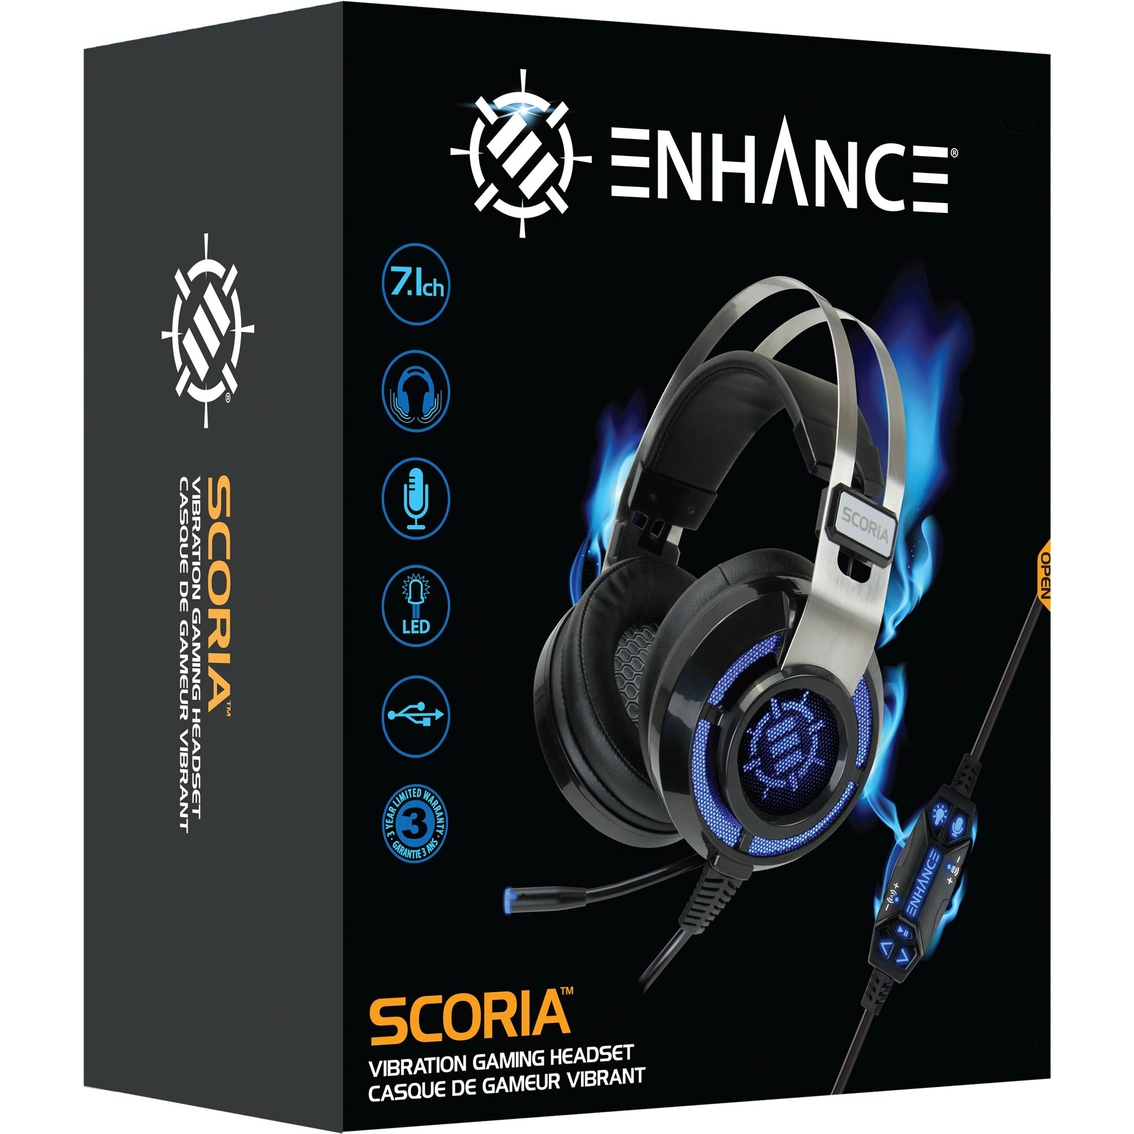 ENHANCE Scoria Gaming Headset with USB 7.1 Virtual Surround Sound. - Image 2 of 2